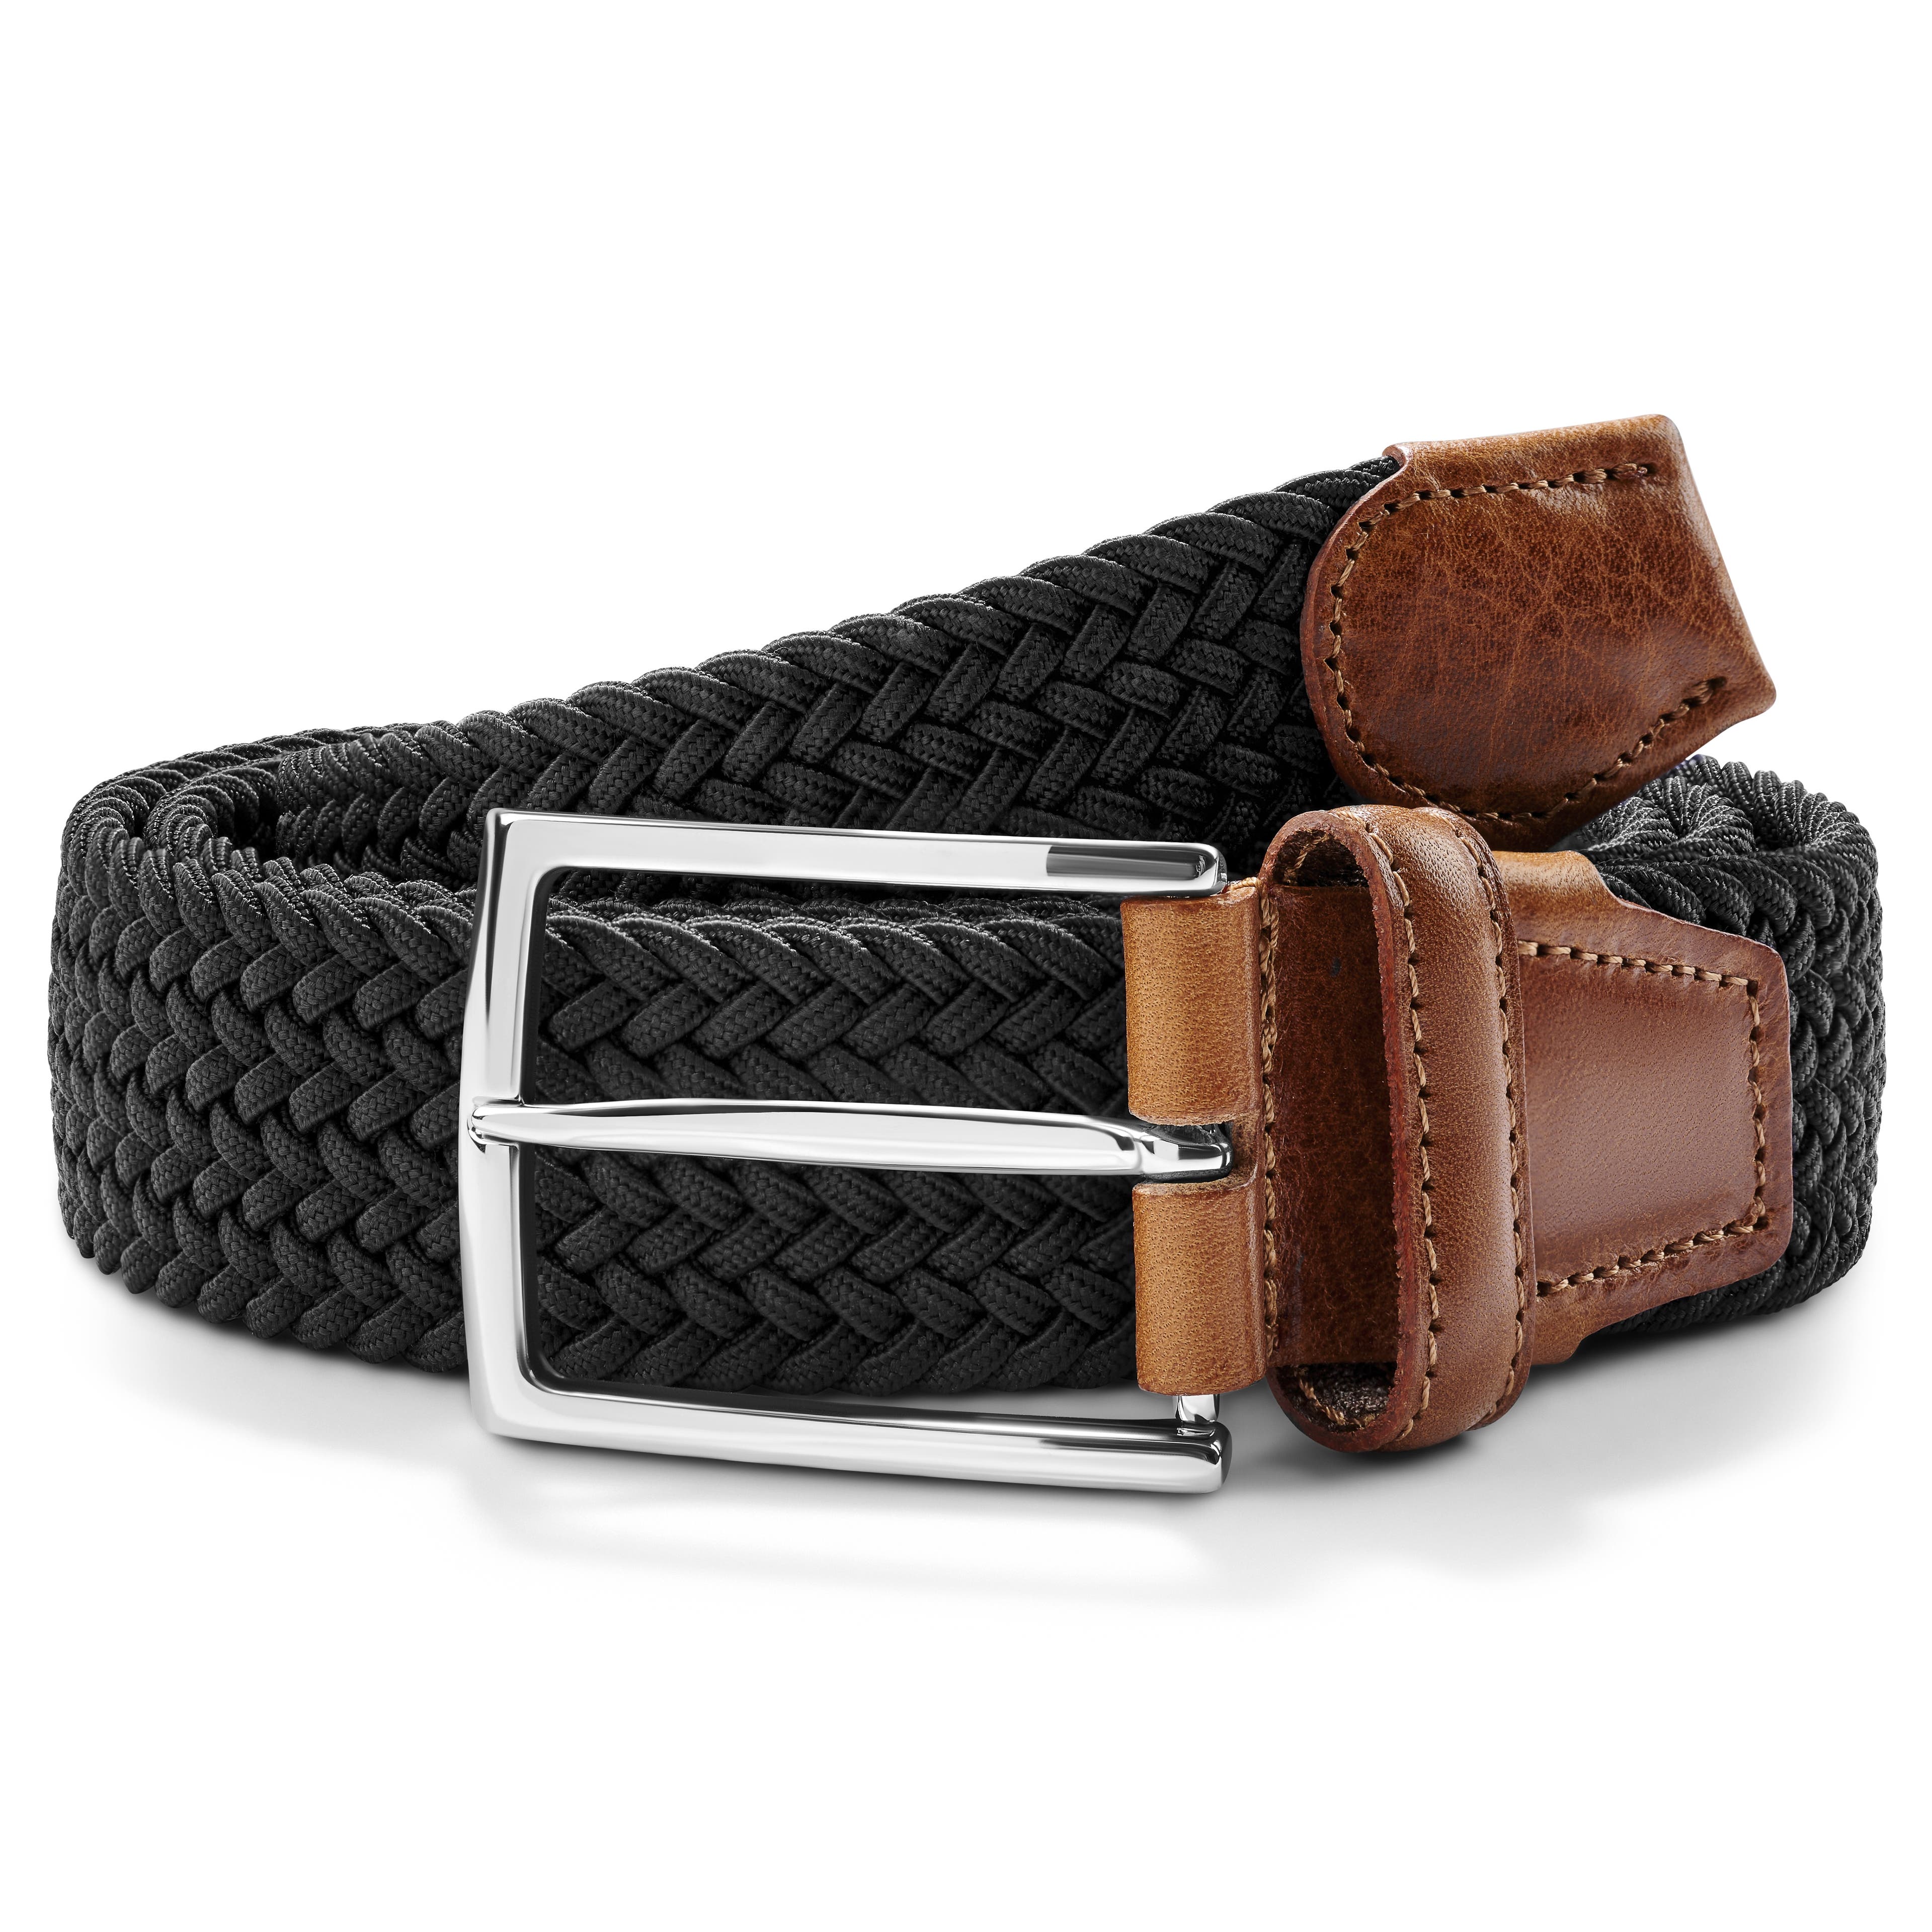 Vincio | Cintura elastica nera e marrone chiaro